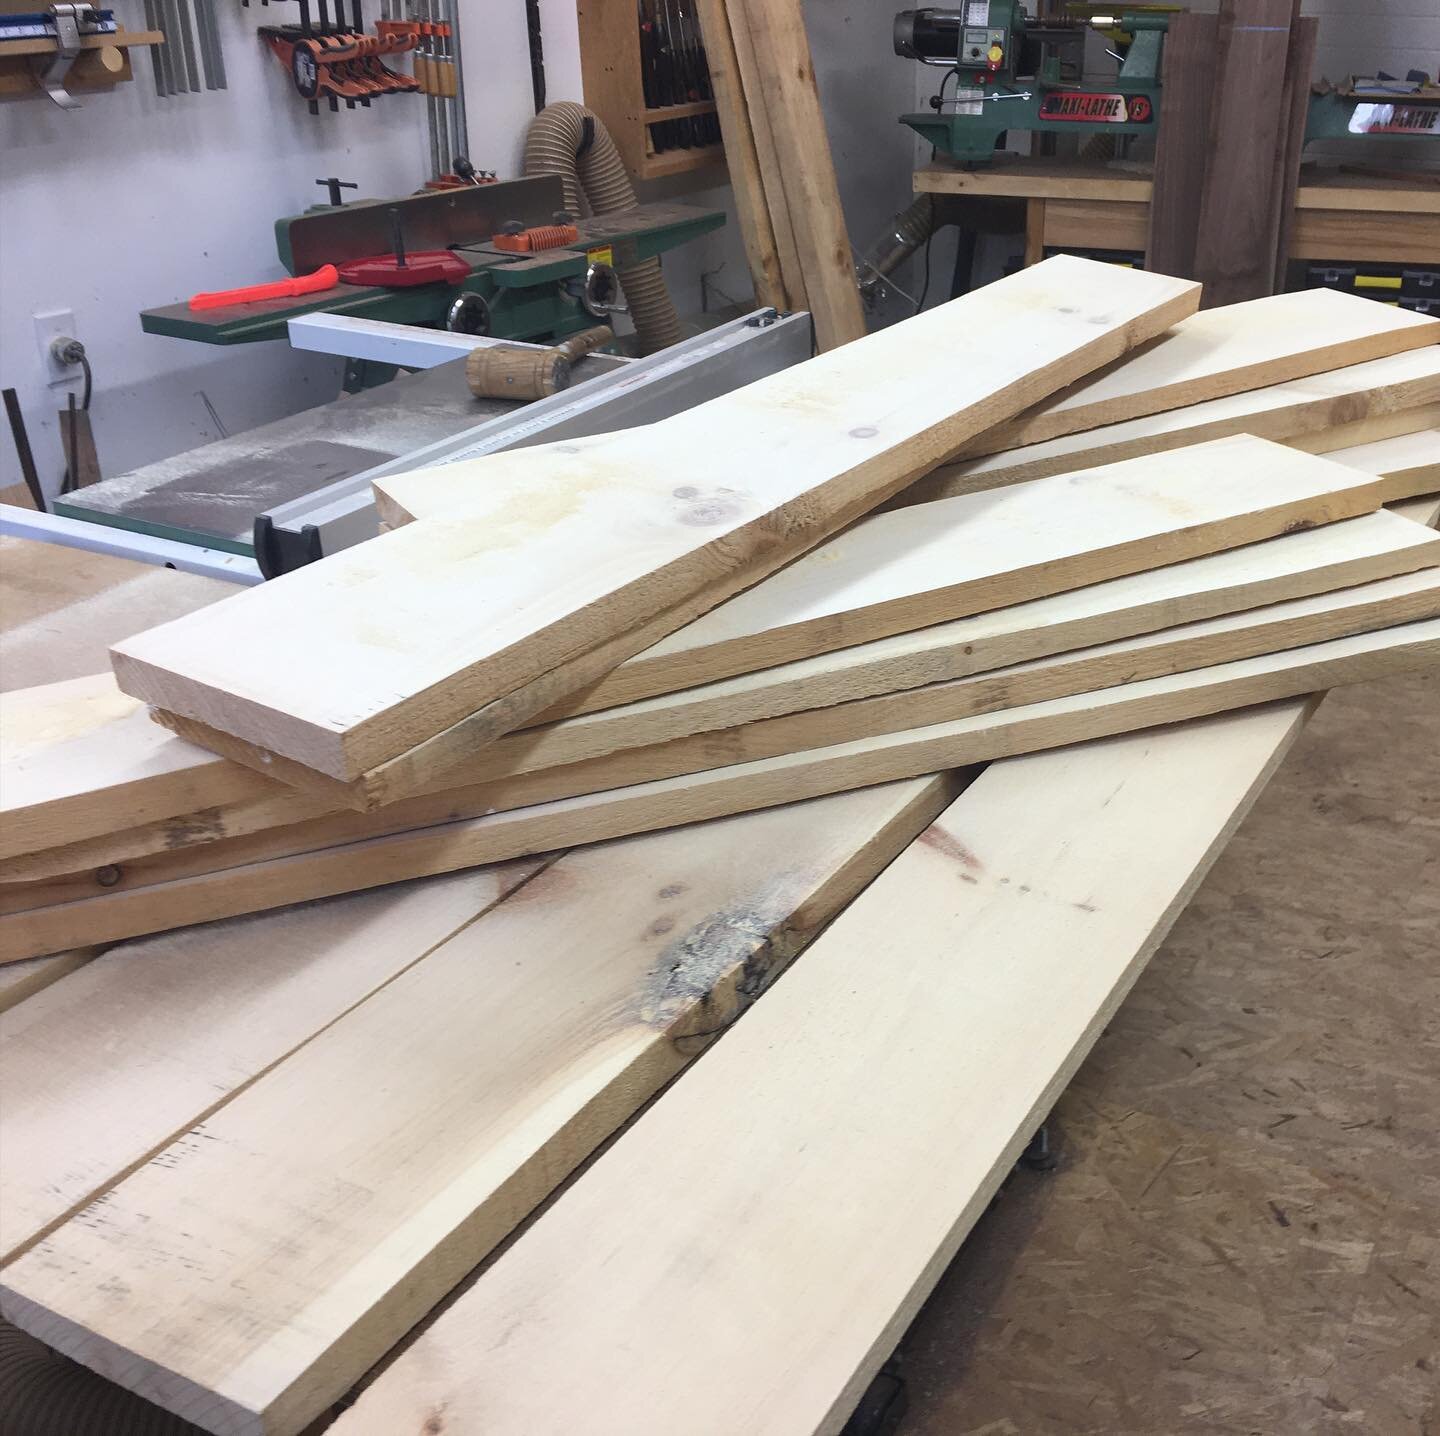 Hello blanket chest! #yeg #yegmaker #theyegmakers #wood #pine #blankets #yegwoodworker #yegwoodworking #woodworking #make #making #maker #craft